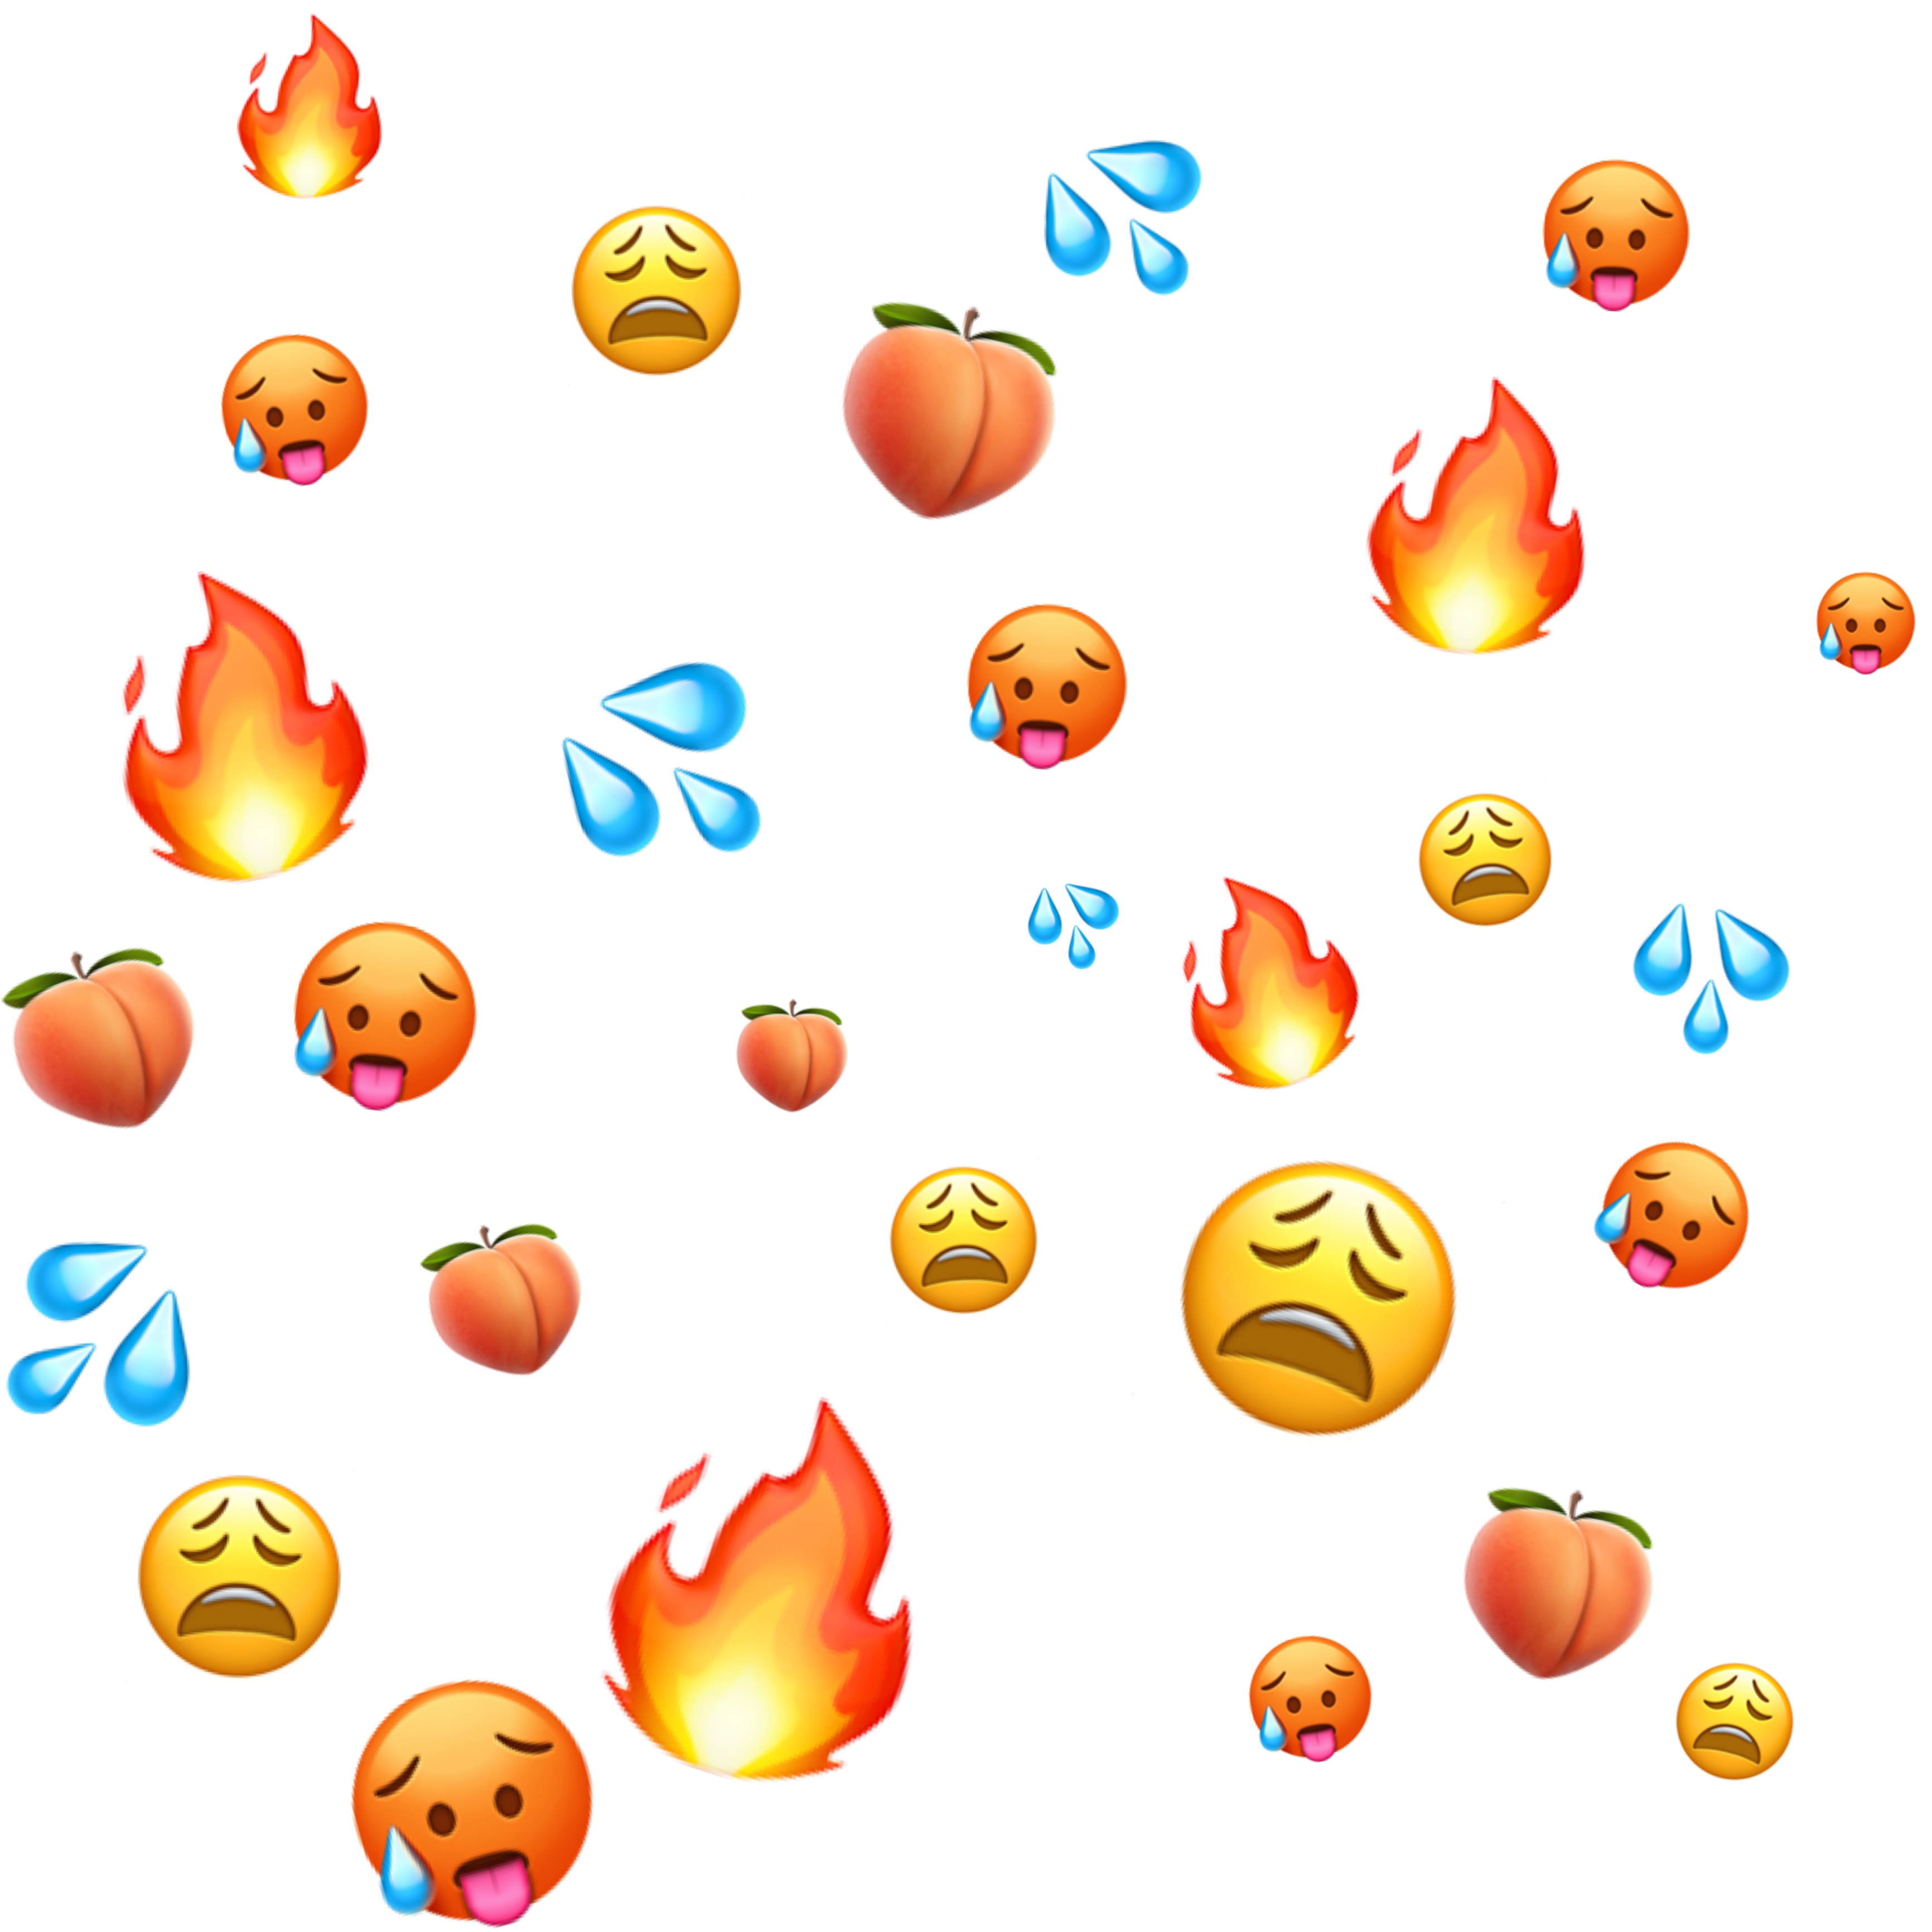 freetoedit emoji emojis hot sticker by @songofachilles.